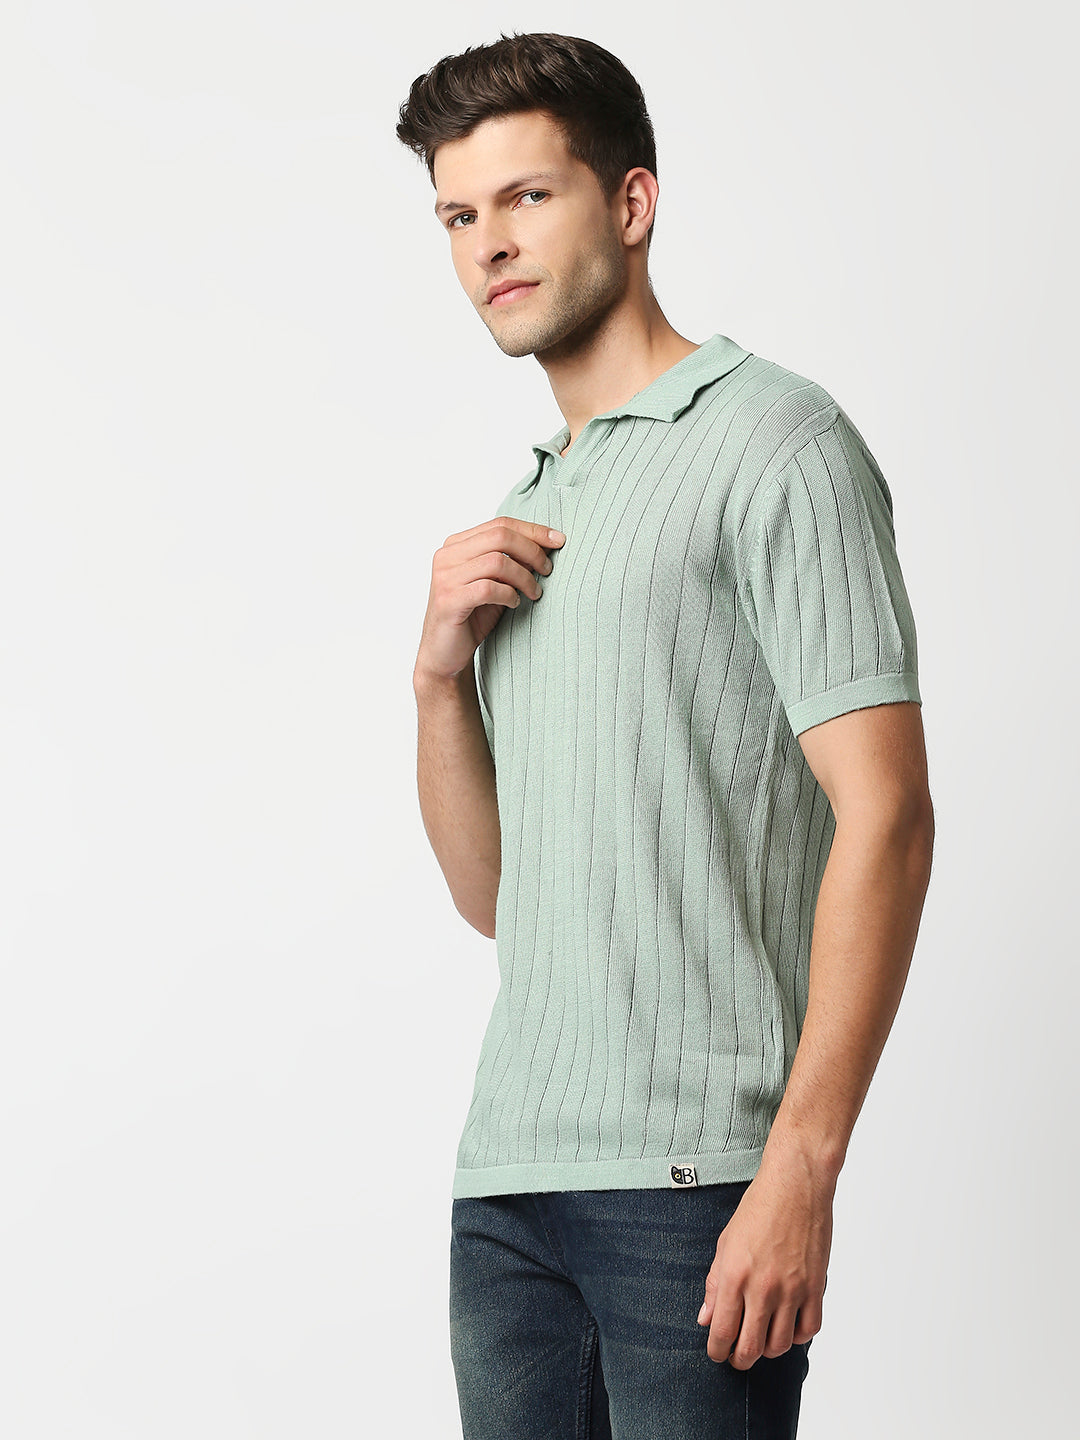 Buy Blamblack Men's collar Flat Knit Half Sleeves Green Color T Shirt